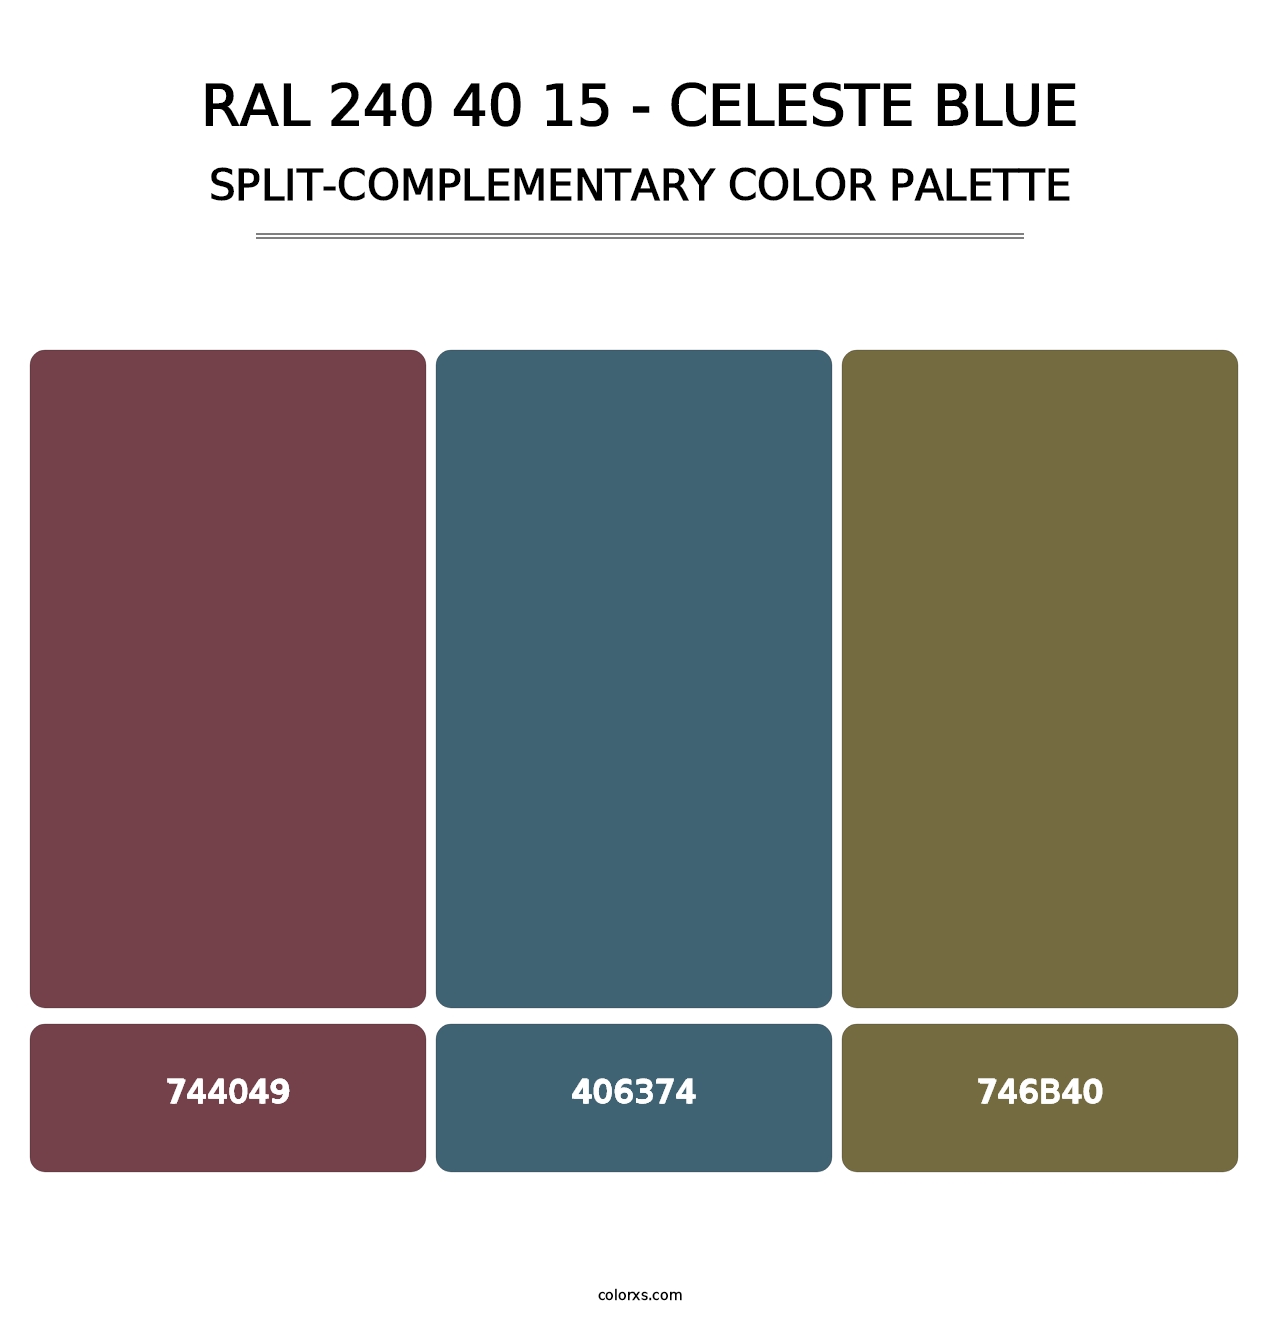 RAL 240 40 15 - Celeste Blue - Split-Complementary Color Palette